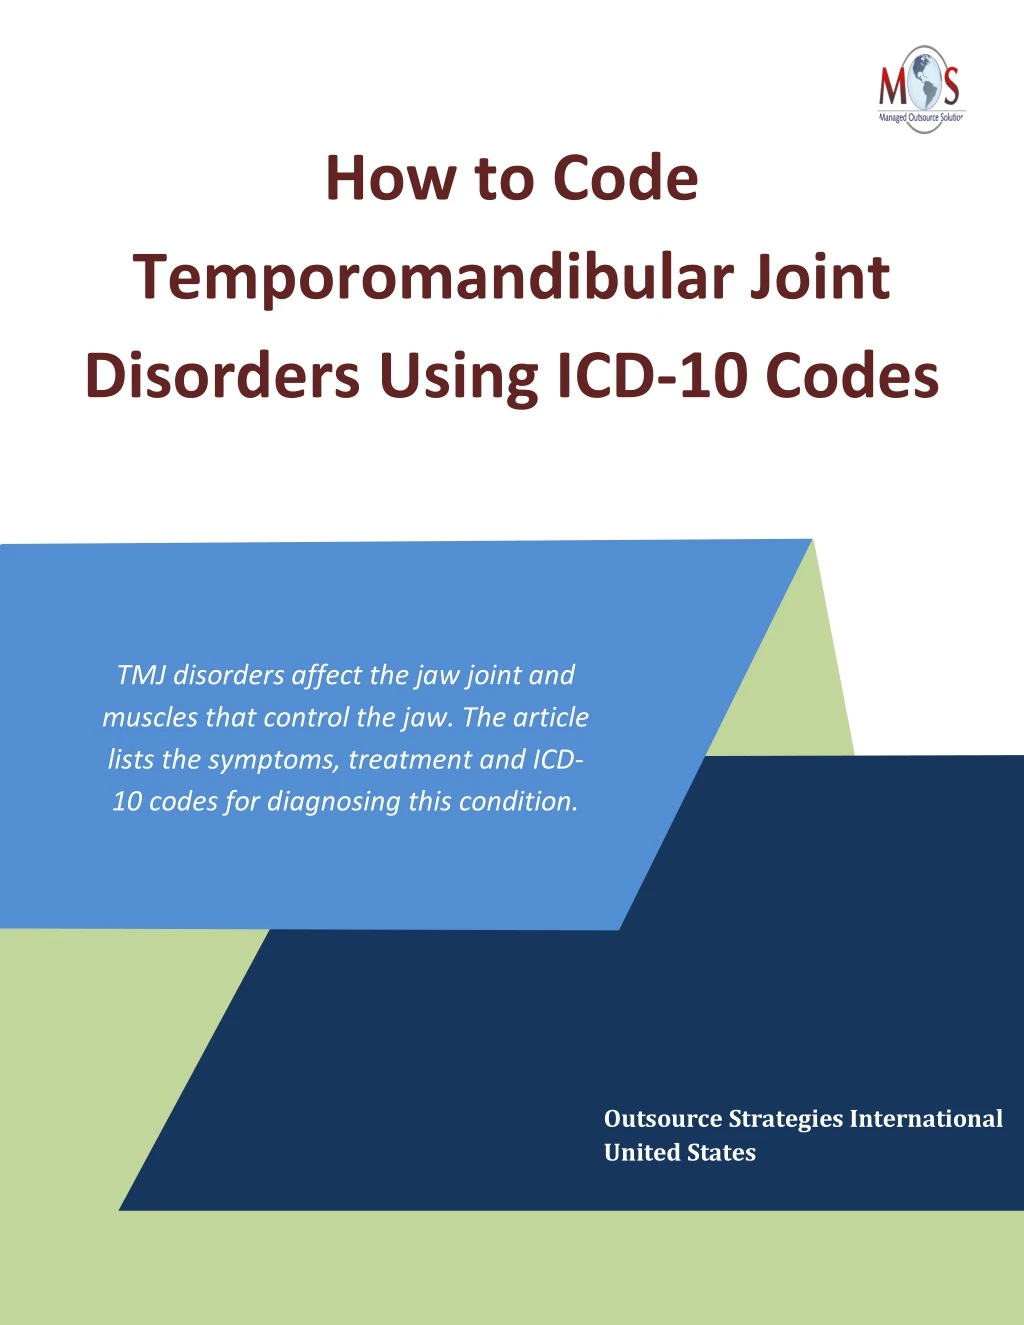 how to code temporomandibular joint disorders